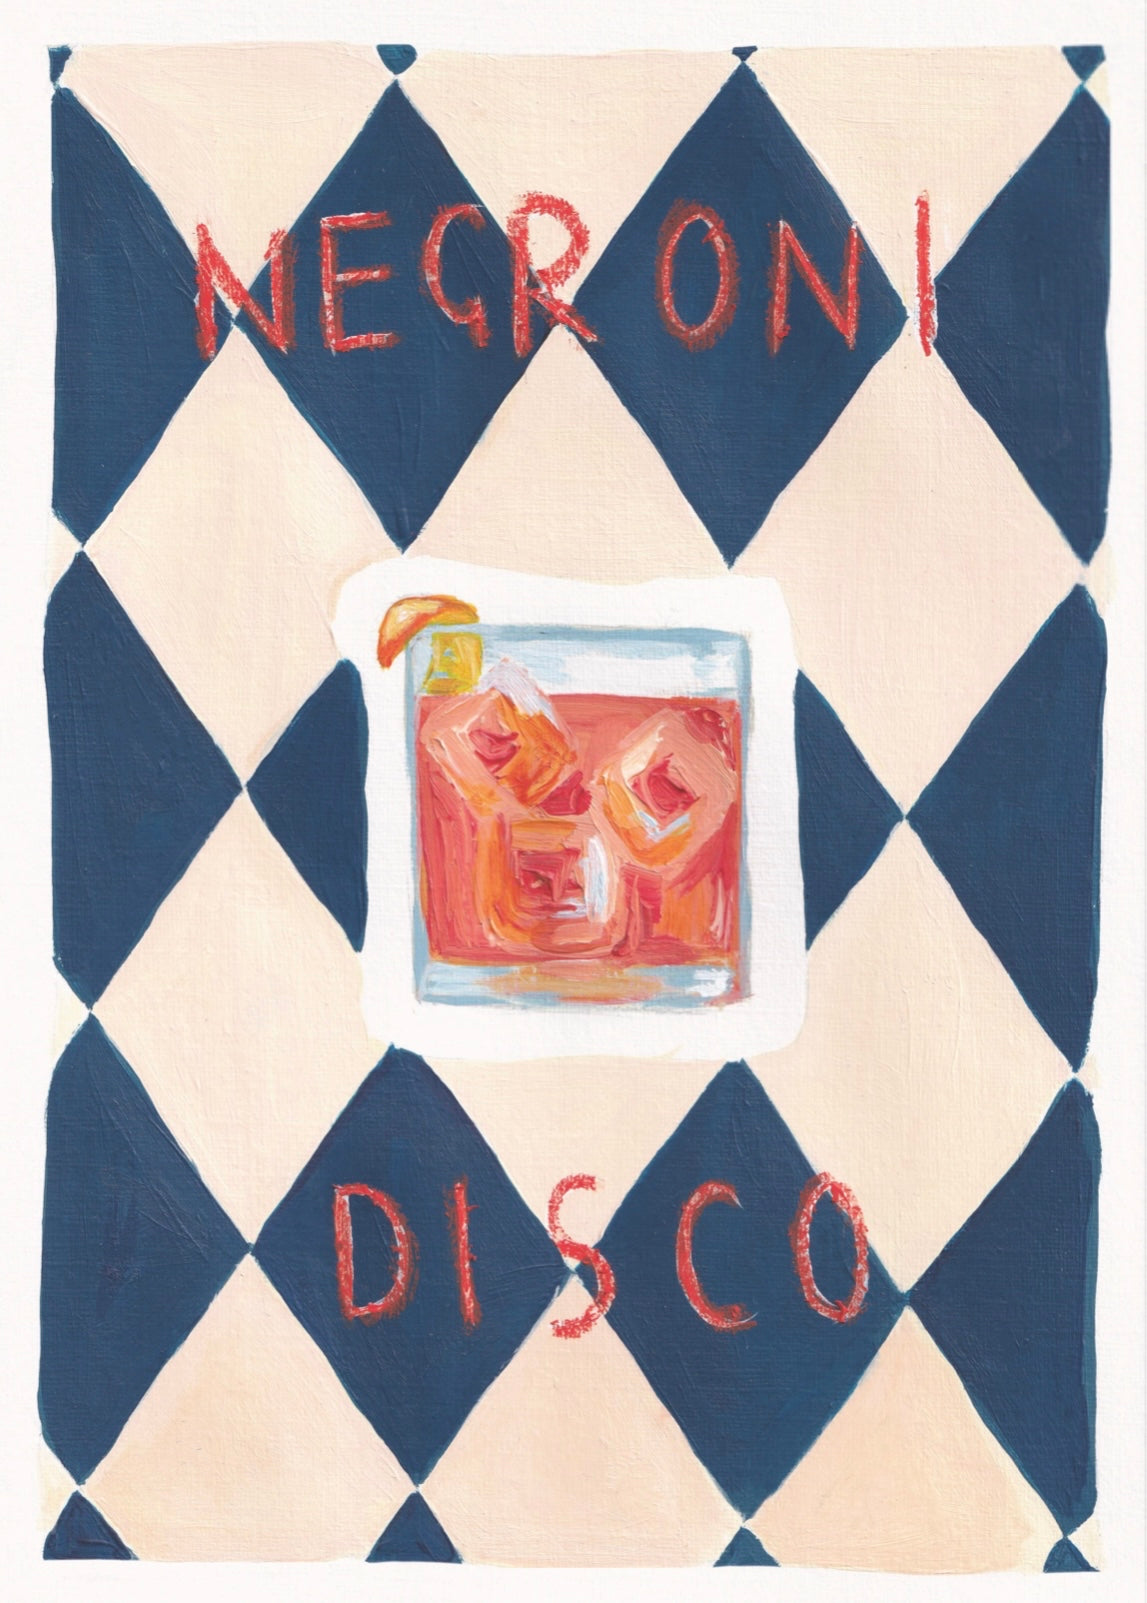 Negroni Disco print